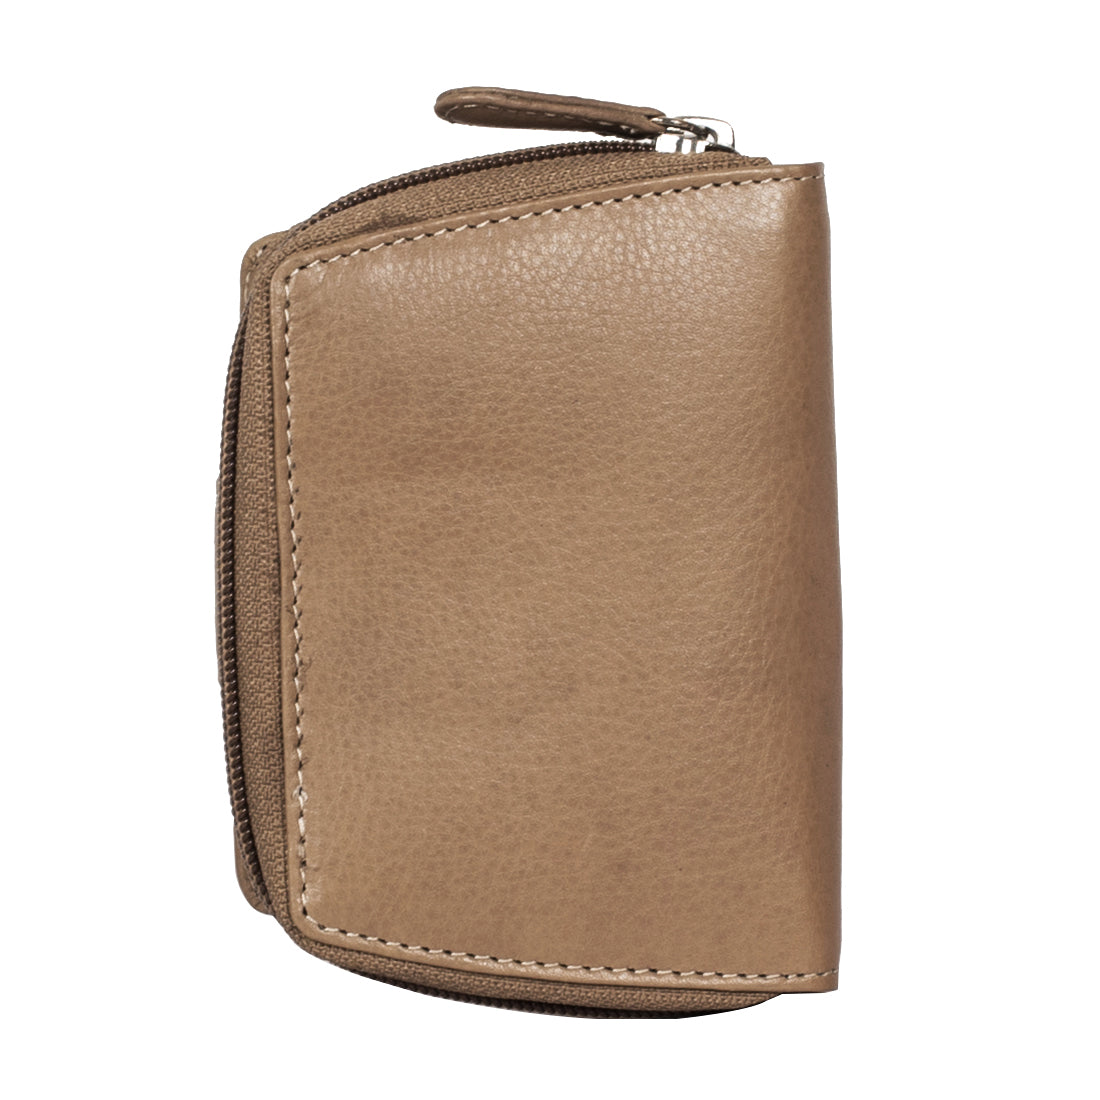 Calfnero Genuine Leather Women's Wallet (3203-Camel)